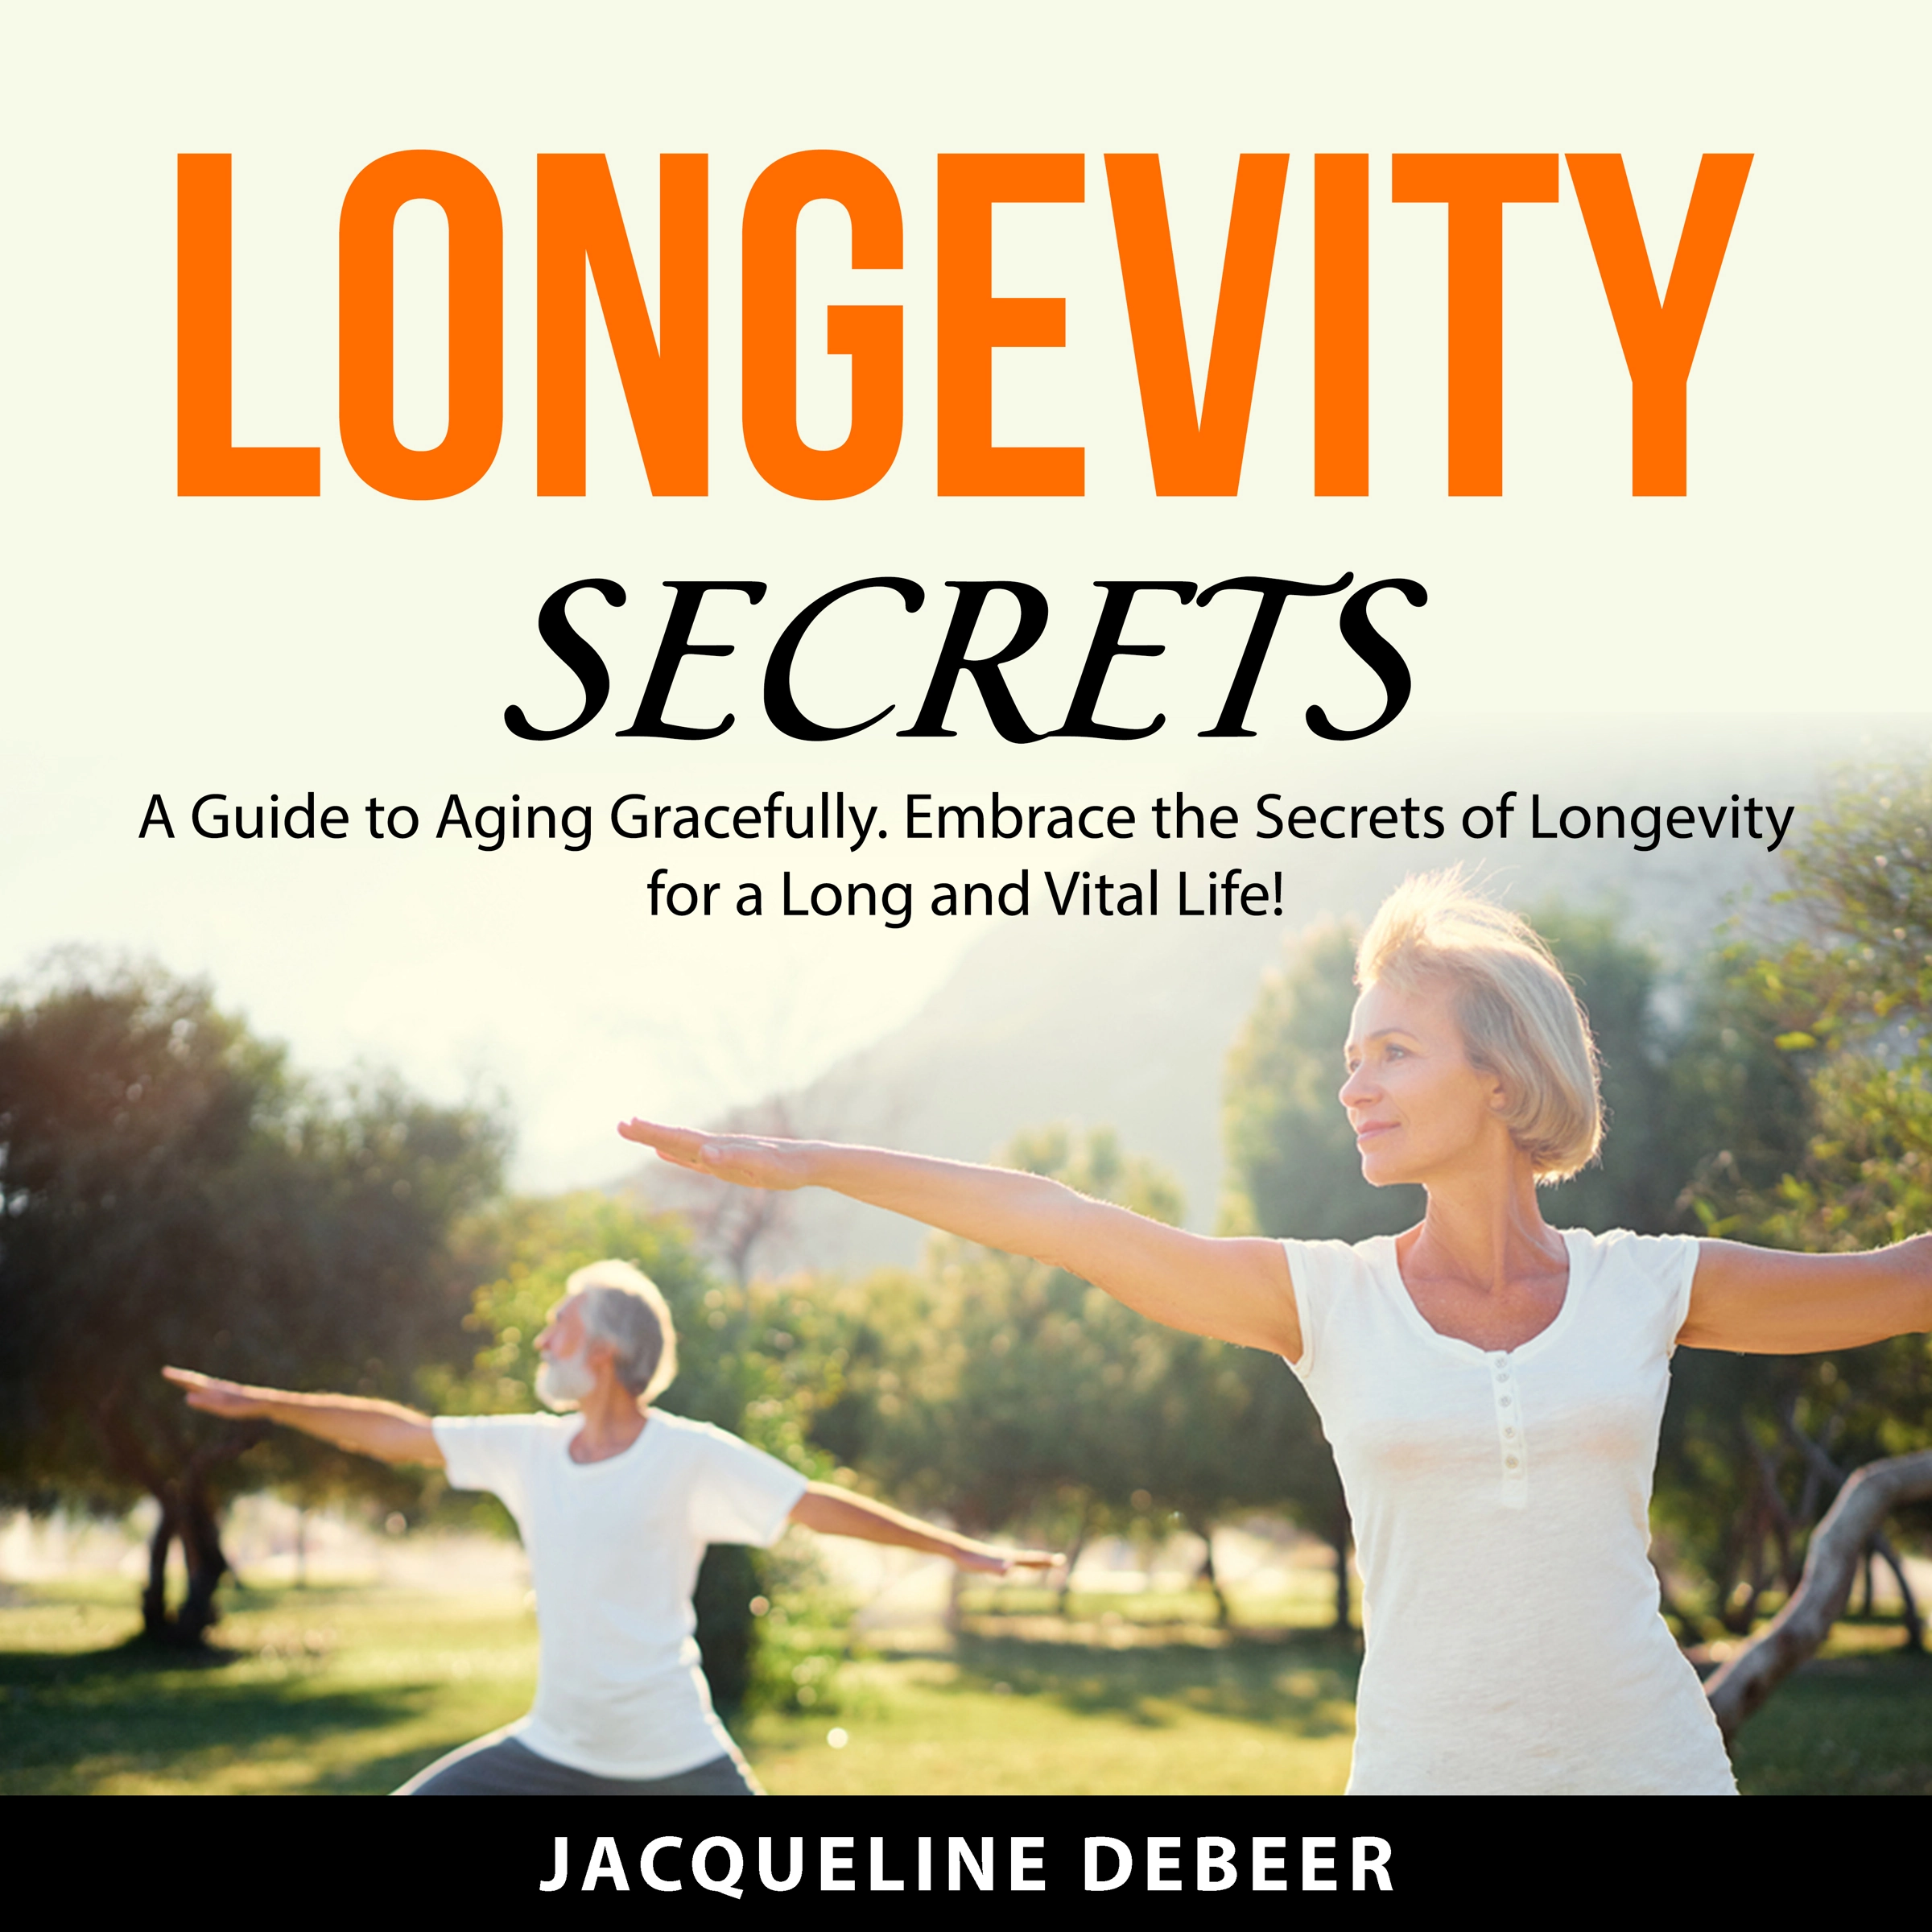 Longevity Secrets Audiobook by Jacqueline DeBeer